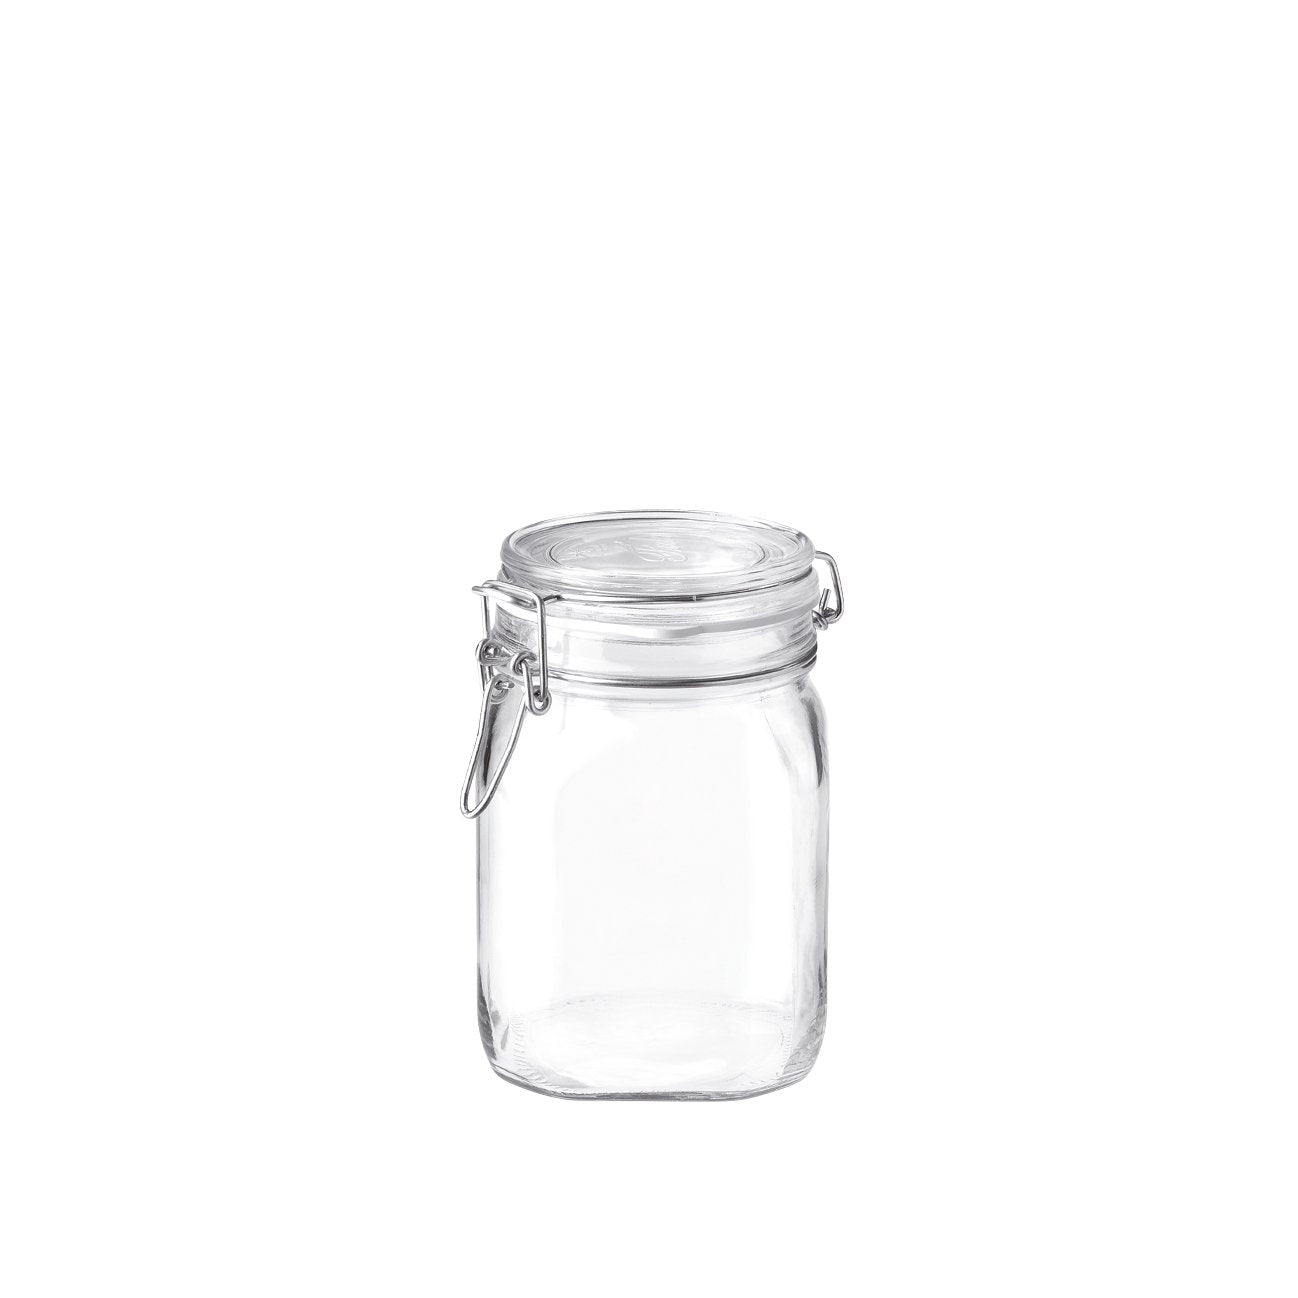 Fido 3pc Food Jar Set (17.5 oz., 33.75 oz., 50.75 oz.)